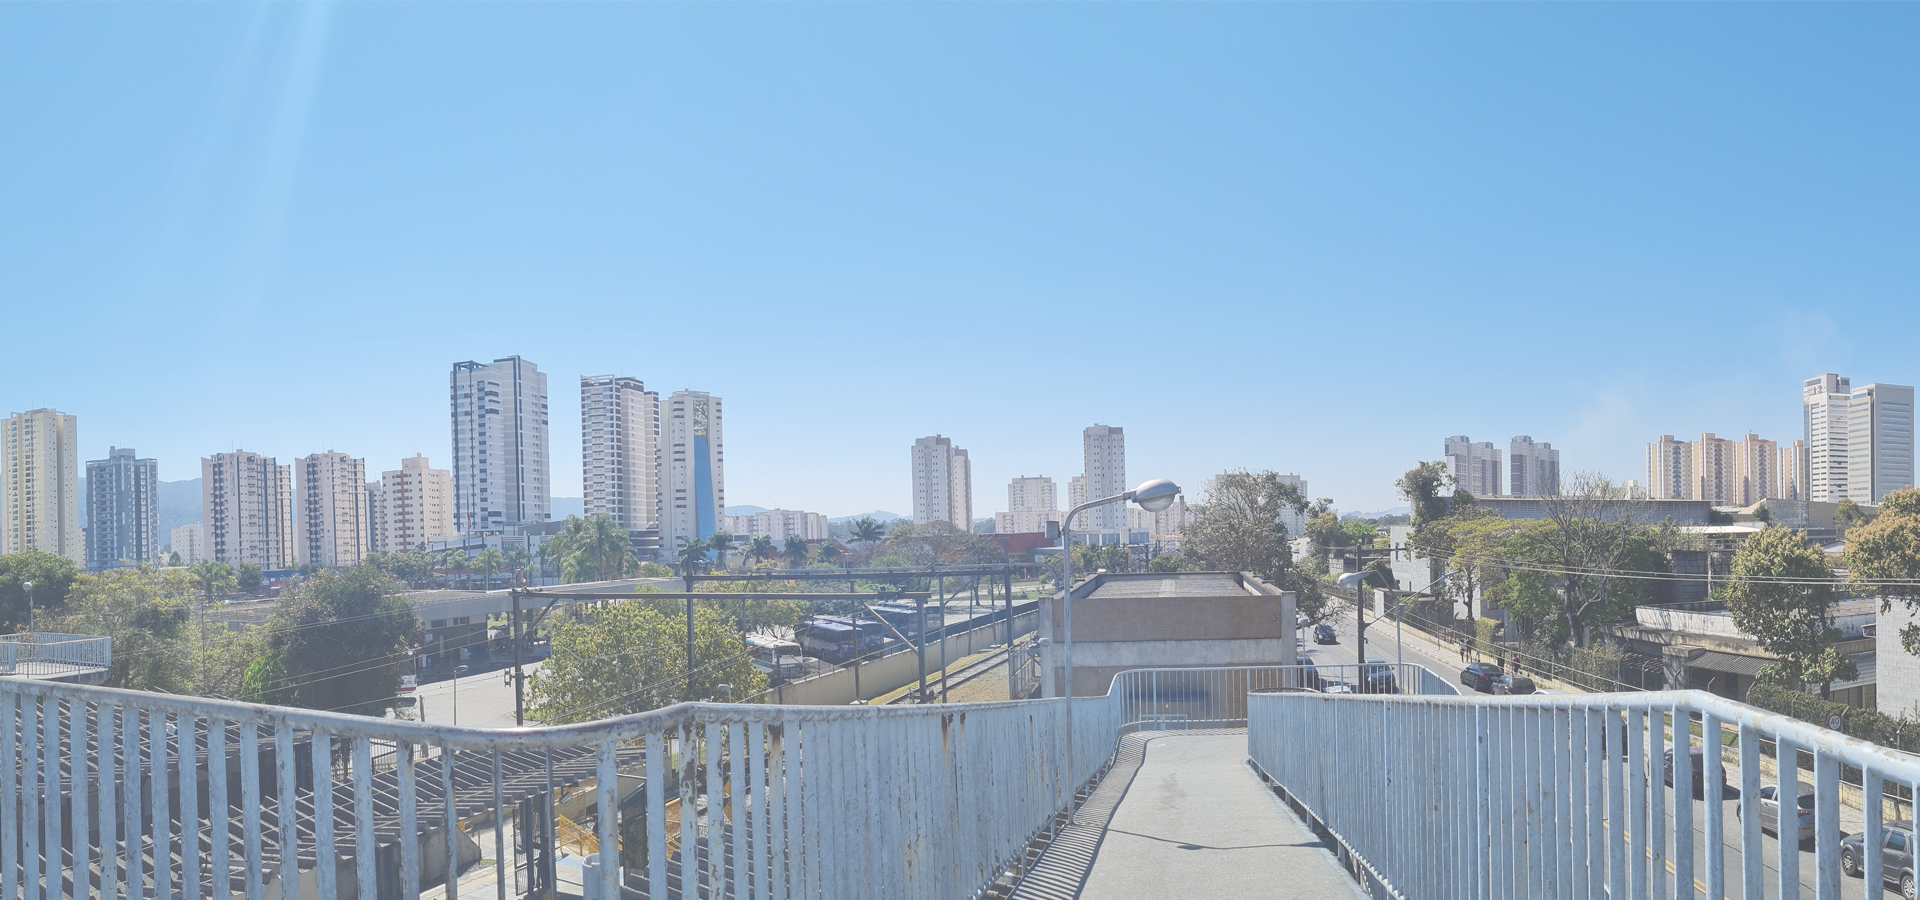 <b>Mogi das Cruzes, São Paulo, Southeast Region, Brazil</b>